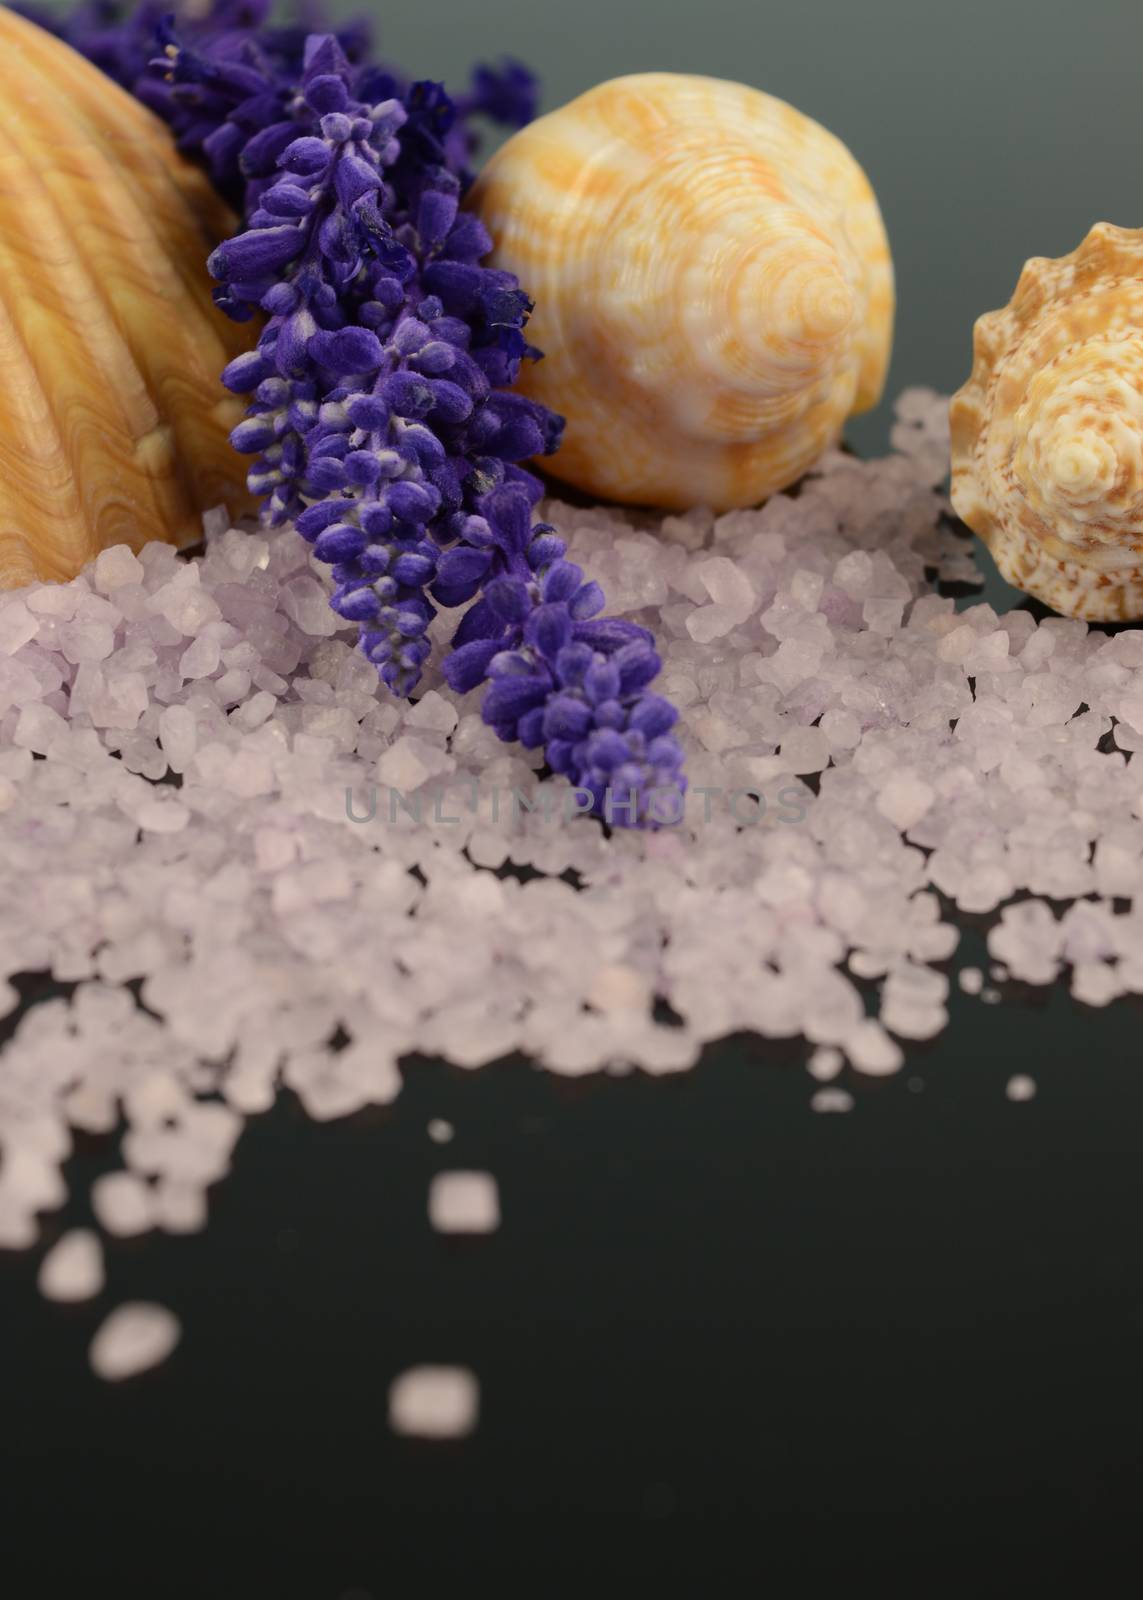 Lavender bath salts with seashells to compliament the spa scene.